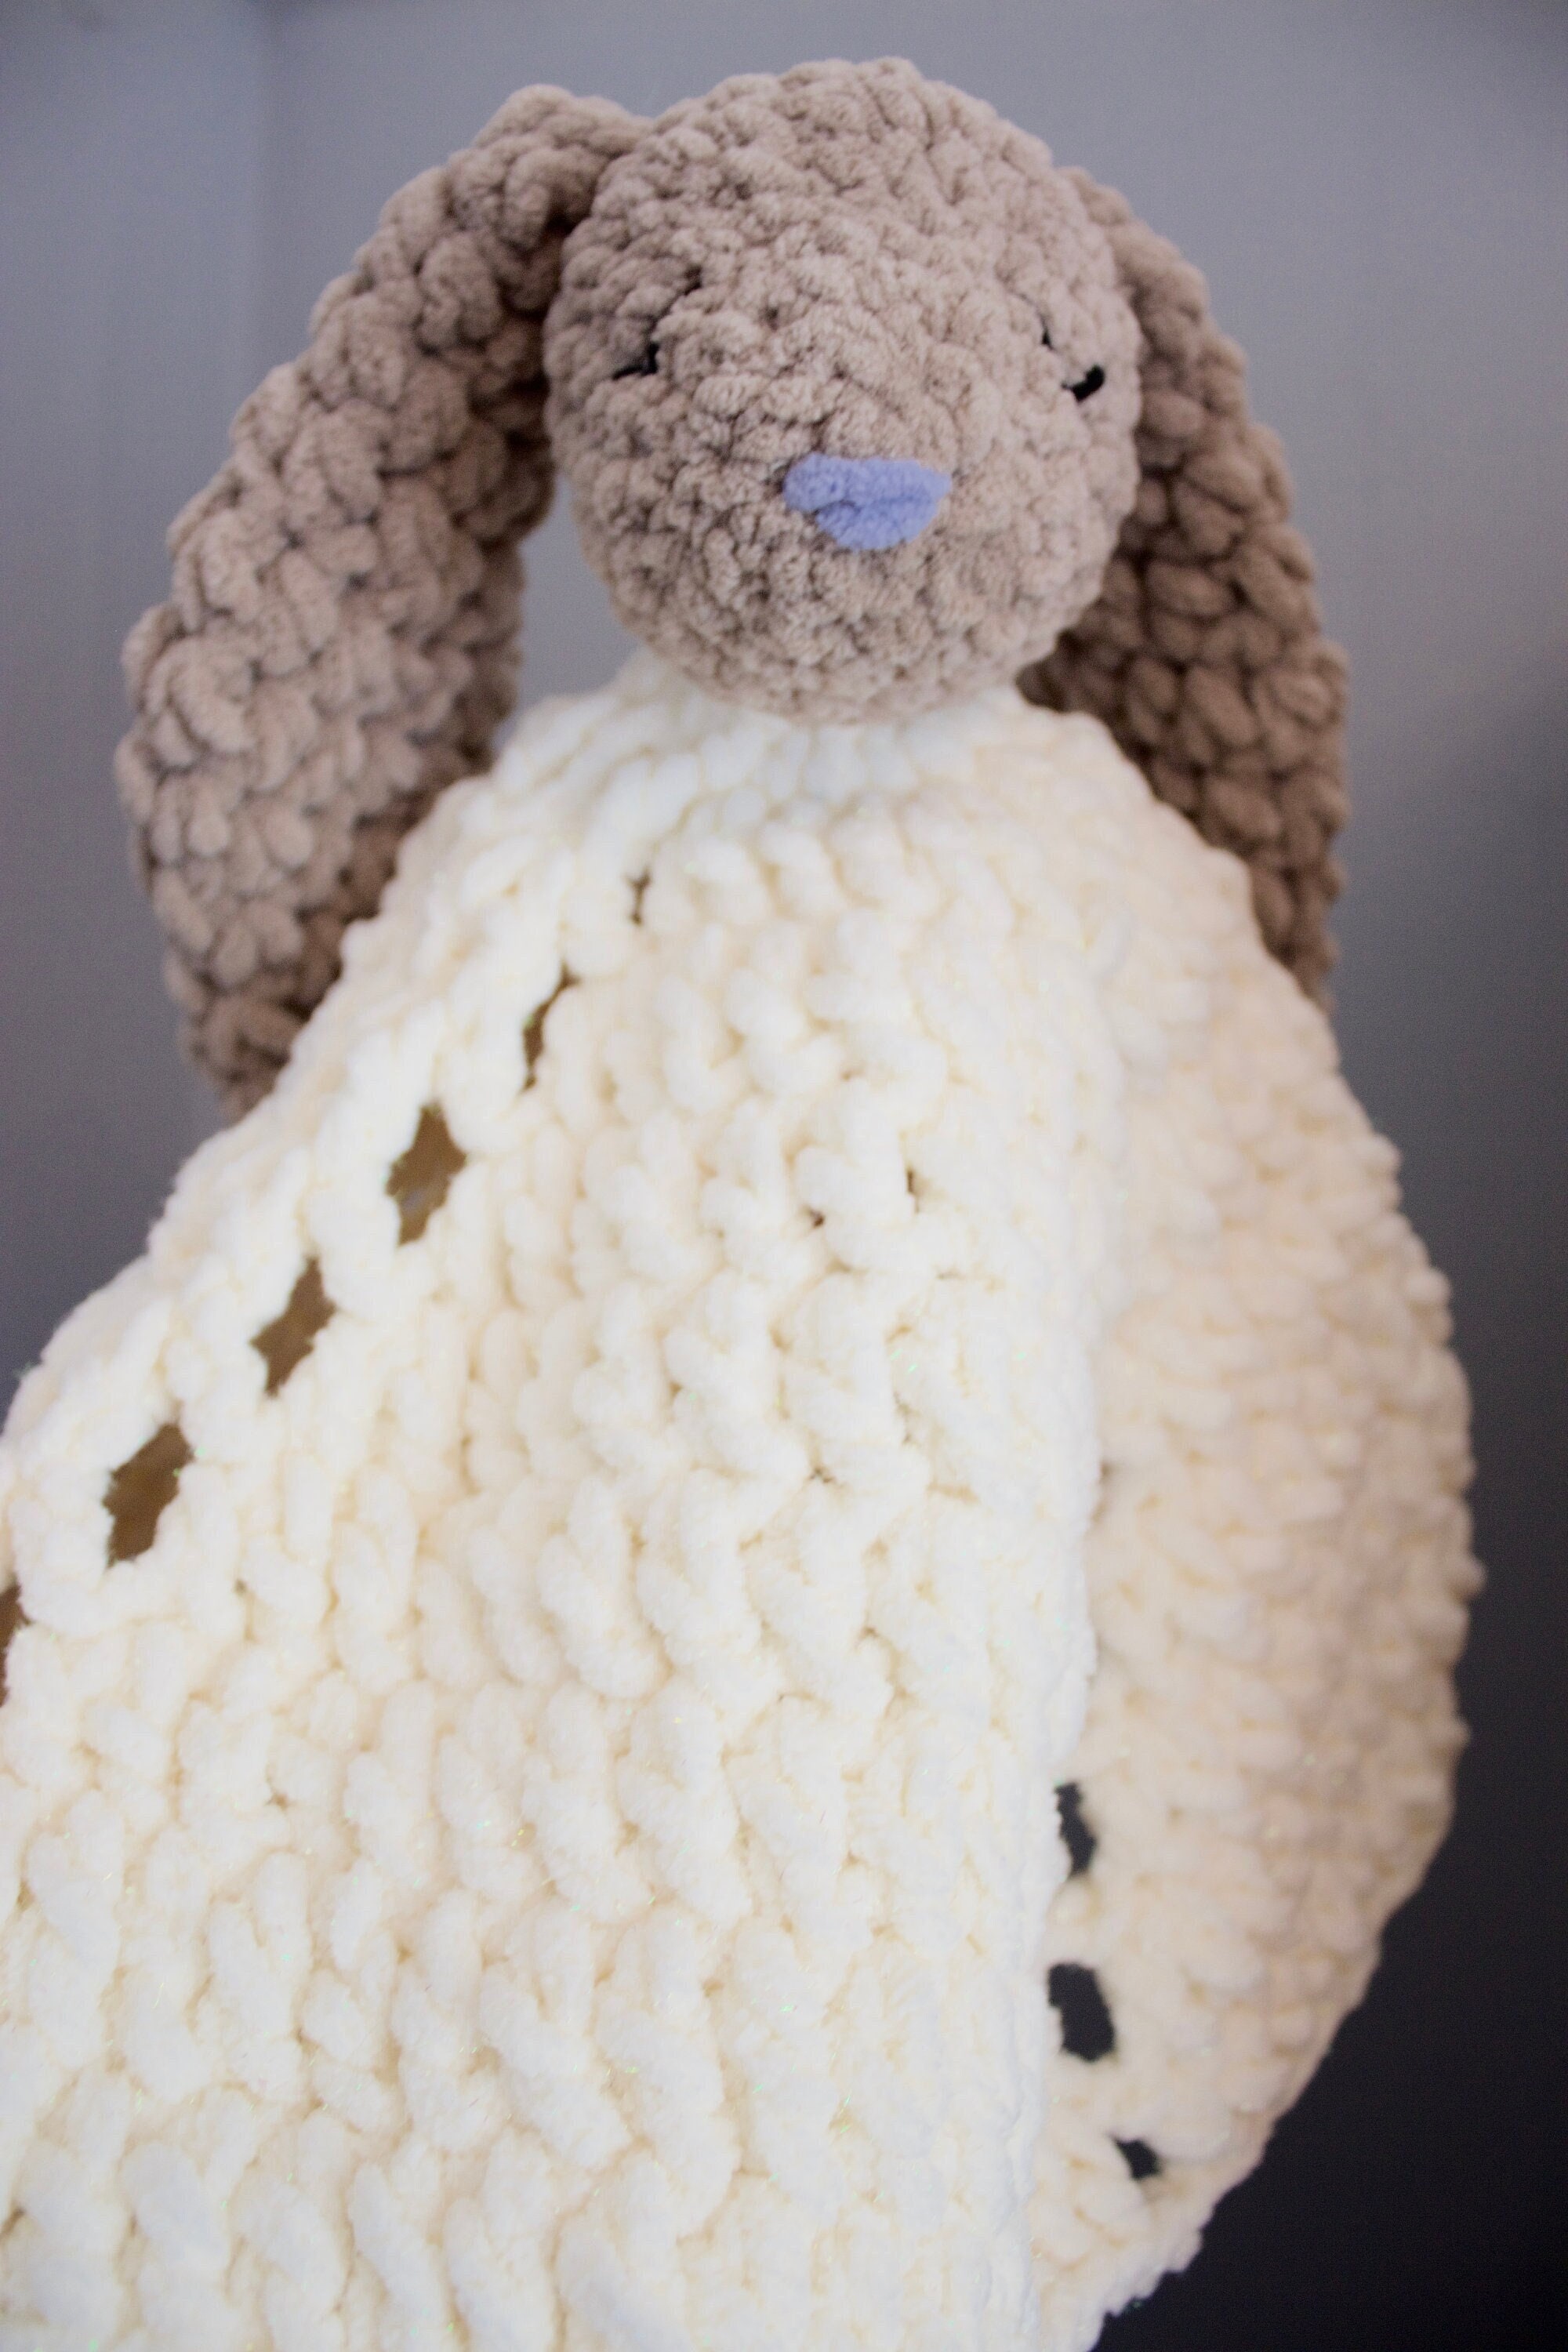 Bernat Baby Velvet Yarn 10.5 Oz. 300 Gram 492 Yard Skein Color 86036 Vapor  Gray Knit Crochet Crafts Needlework 